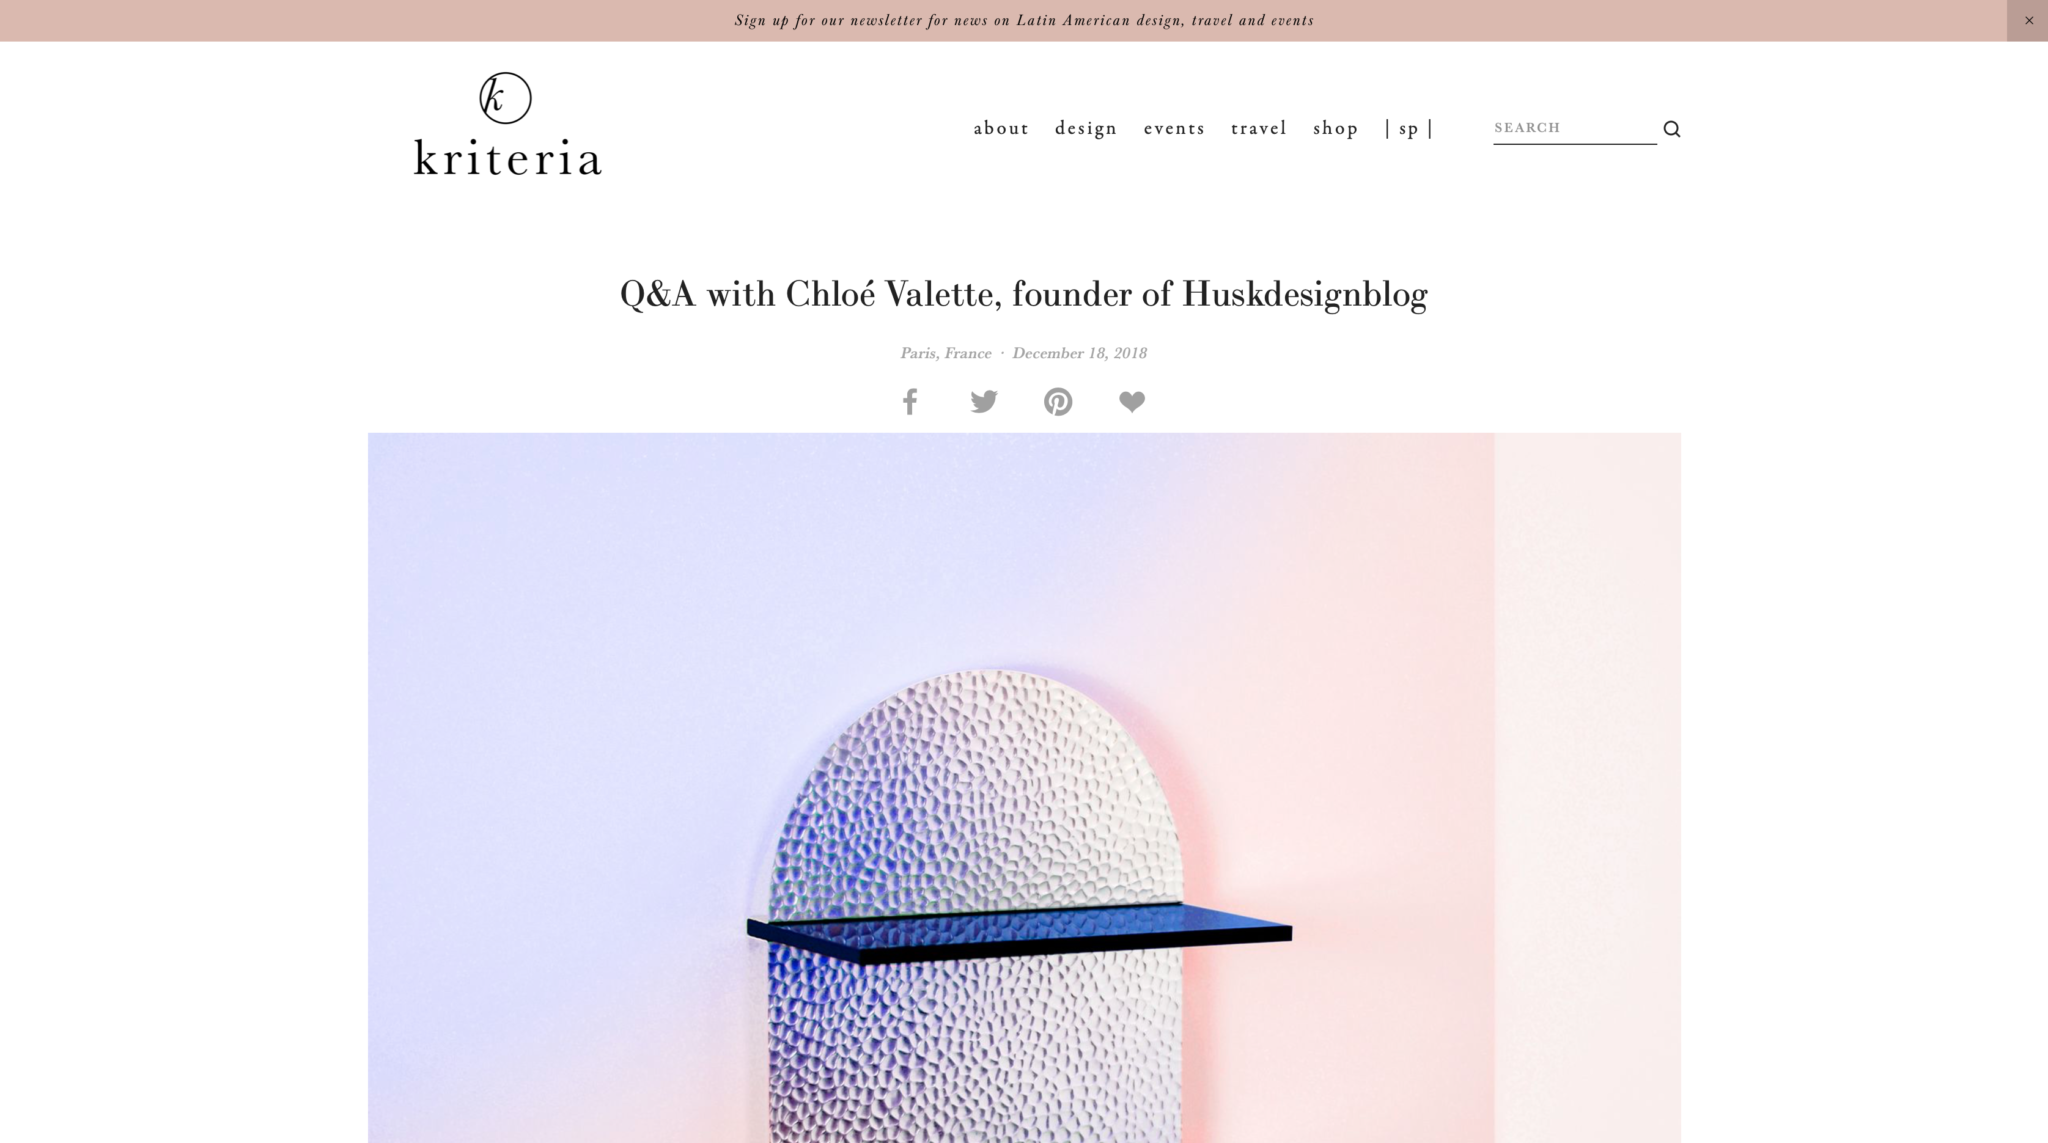 Huskdesignblog, Q&A with founder Chloé Valette, Kriteria